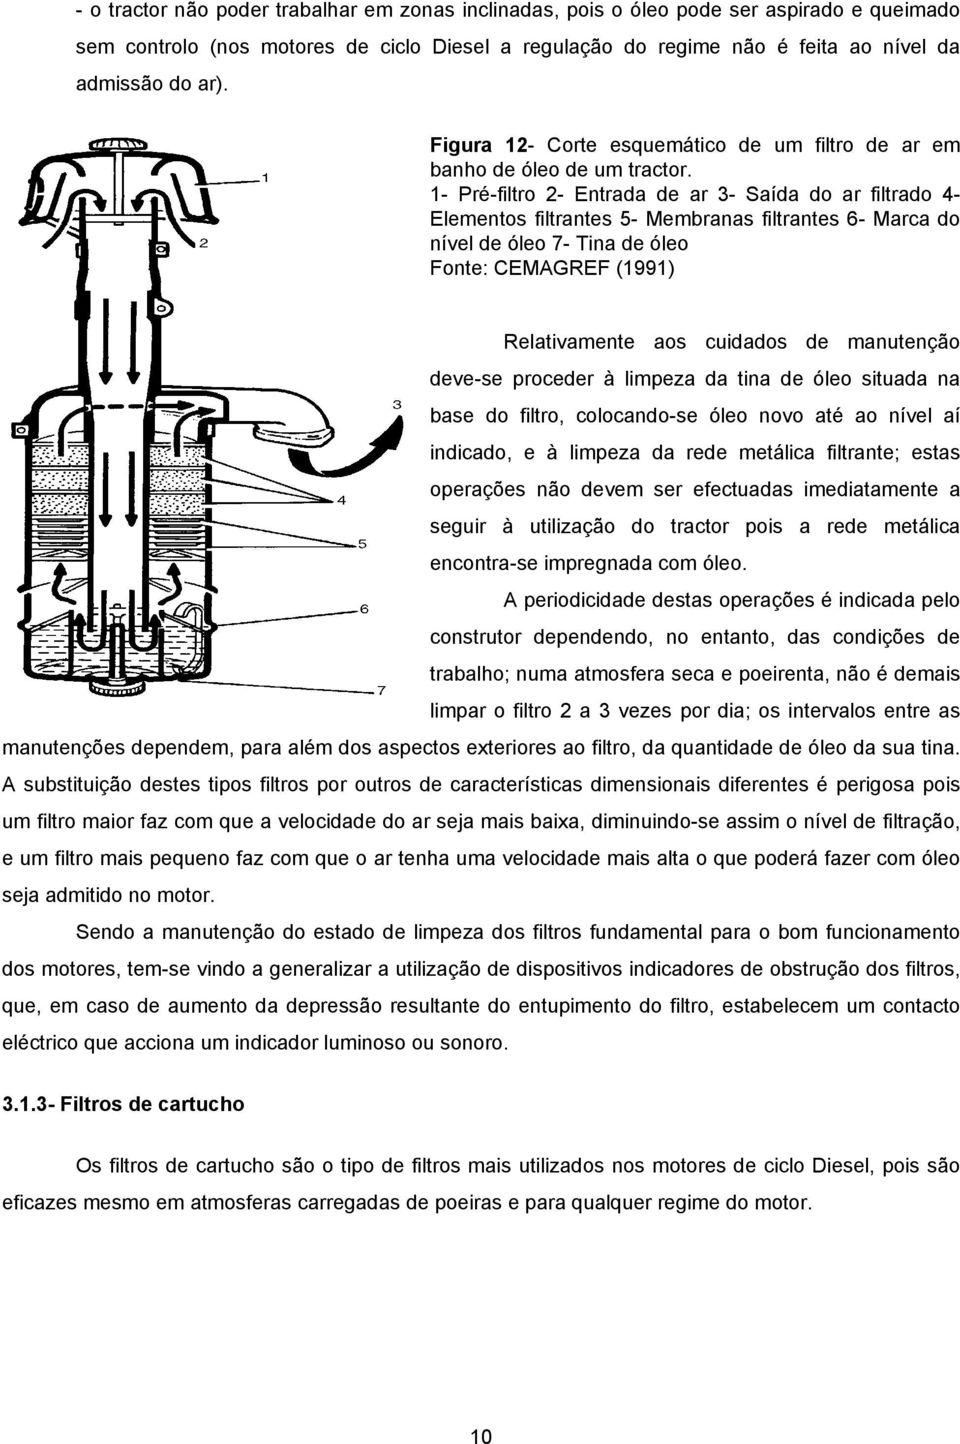 1- Pré-filtro 2- Entrada de ar 3- Saída do ar filtrado 4- Elementos filtrantes 5- Membranas filtrantes 6- Marca do nível de óleo 7- Tina de óleo Fonte: CEMAGREF (1991) Relativamente aos cuidados de